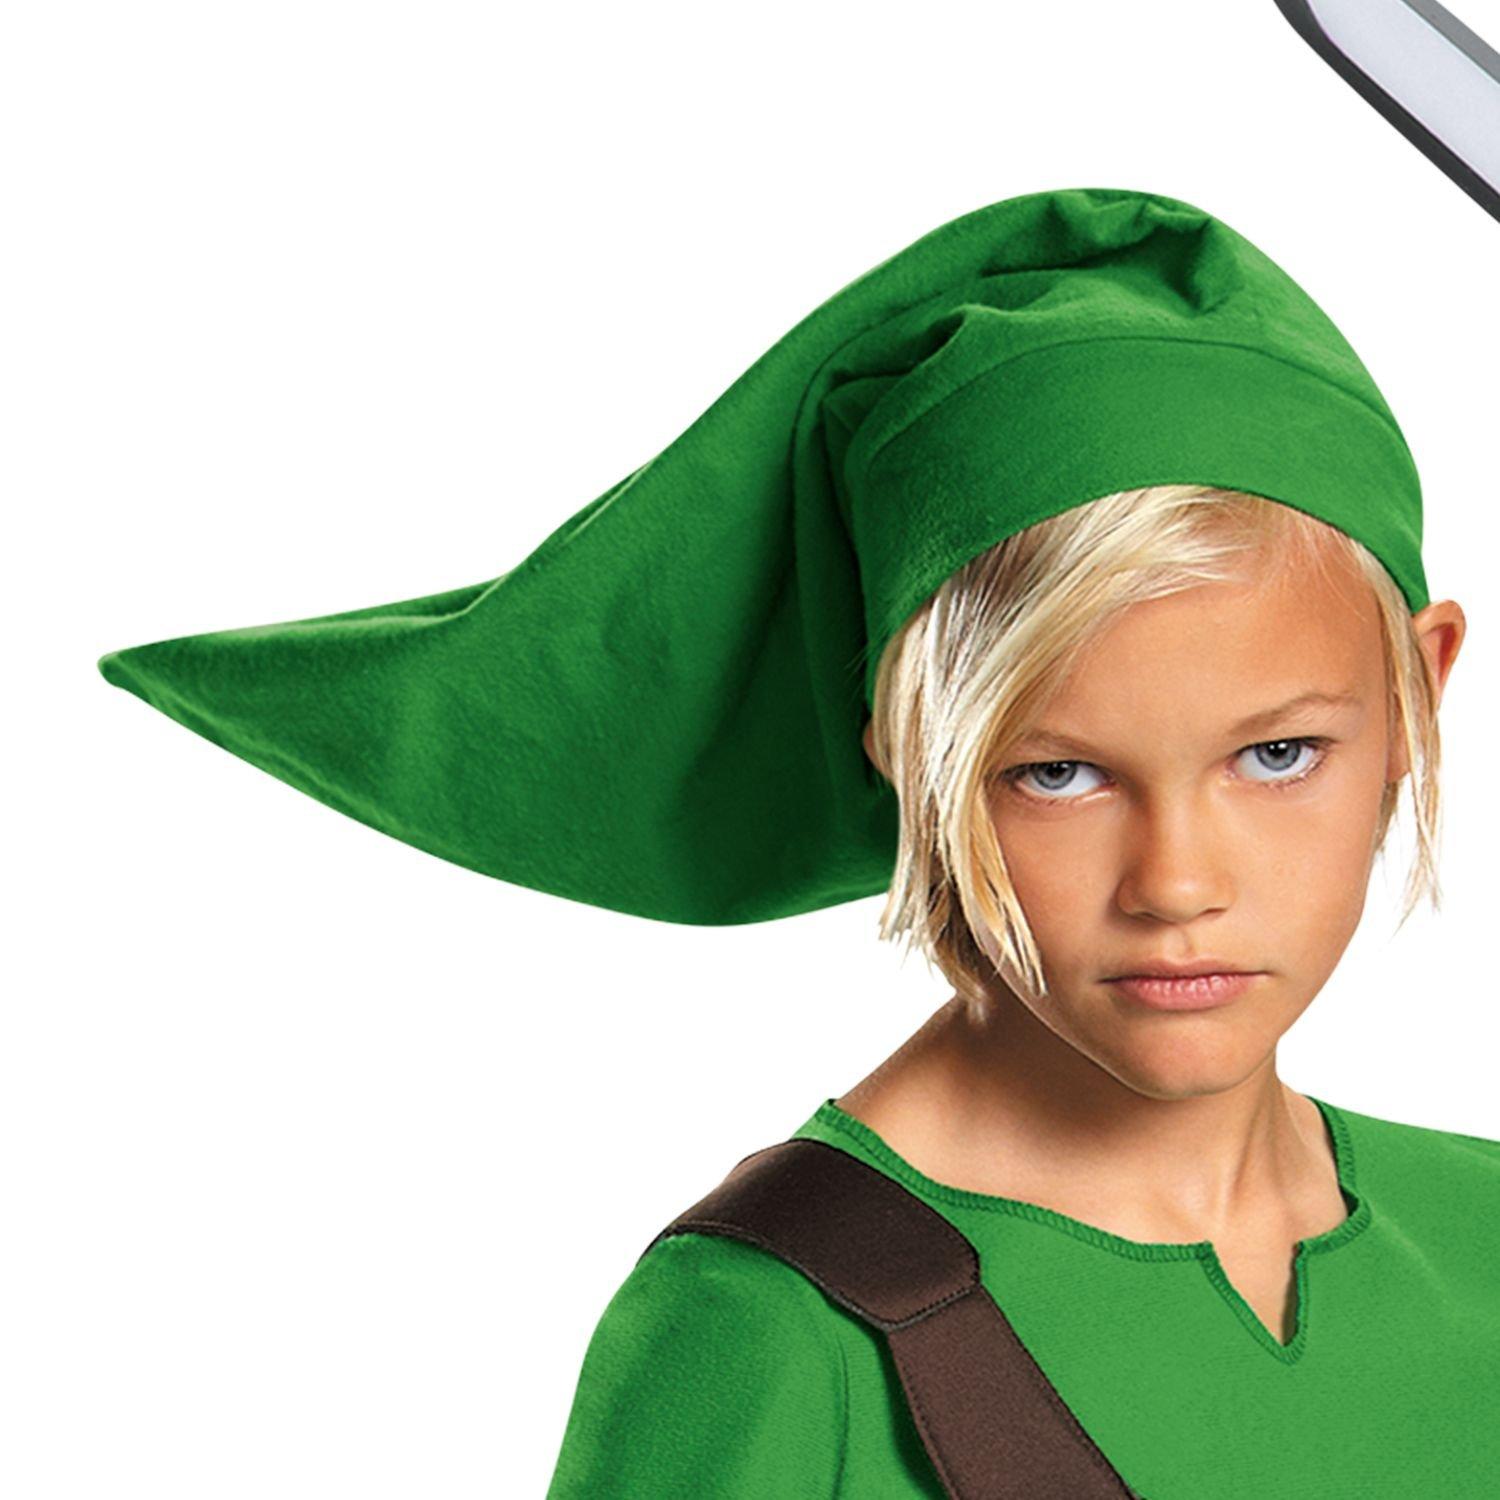 Boys Link Costume - The Legend of Zelda | Party City